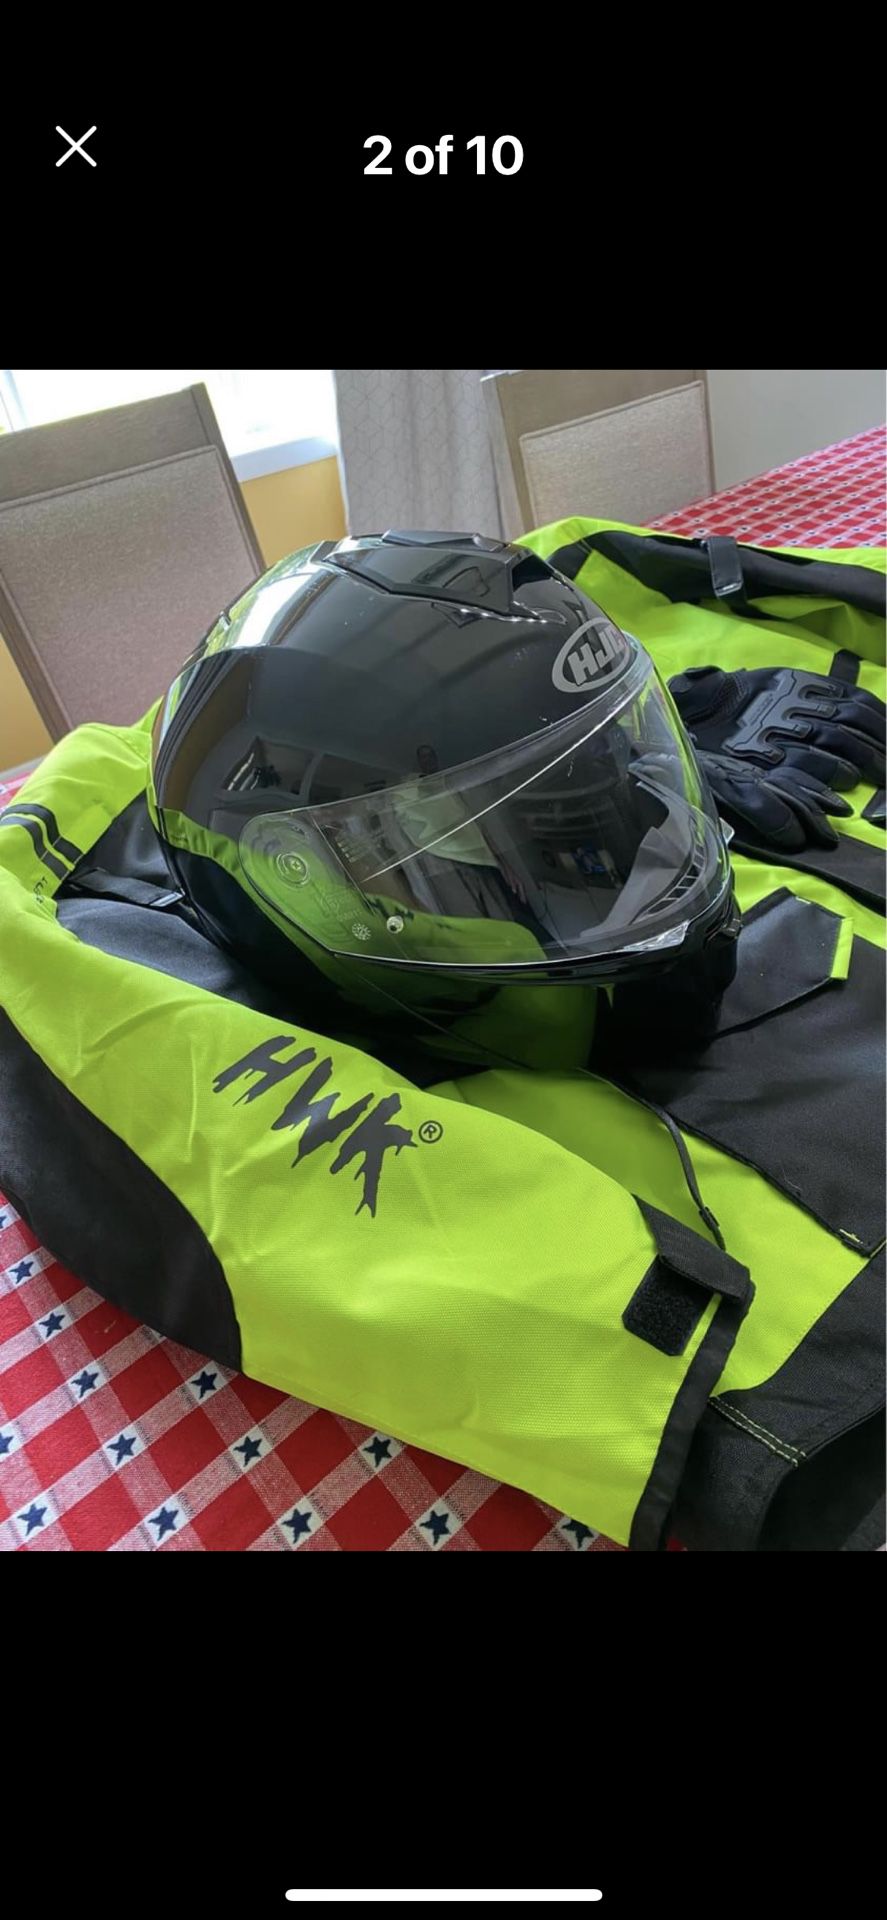 Helmet,jacket And Gloves